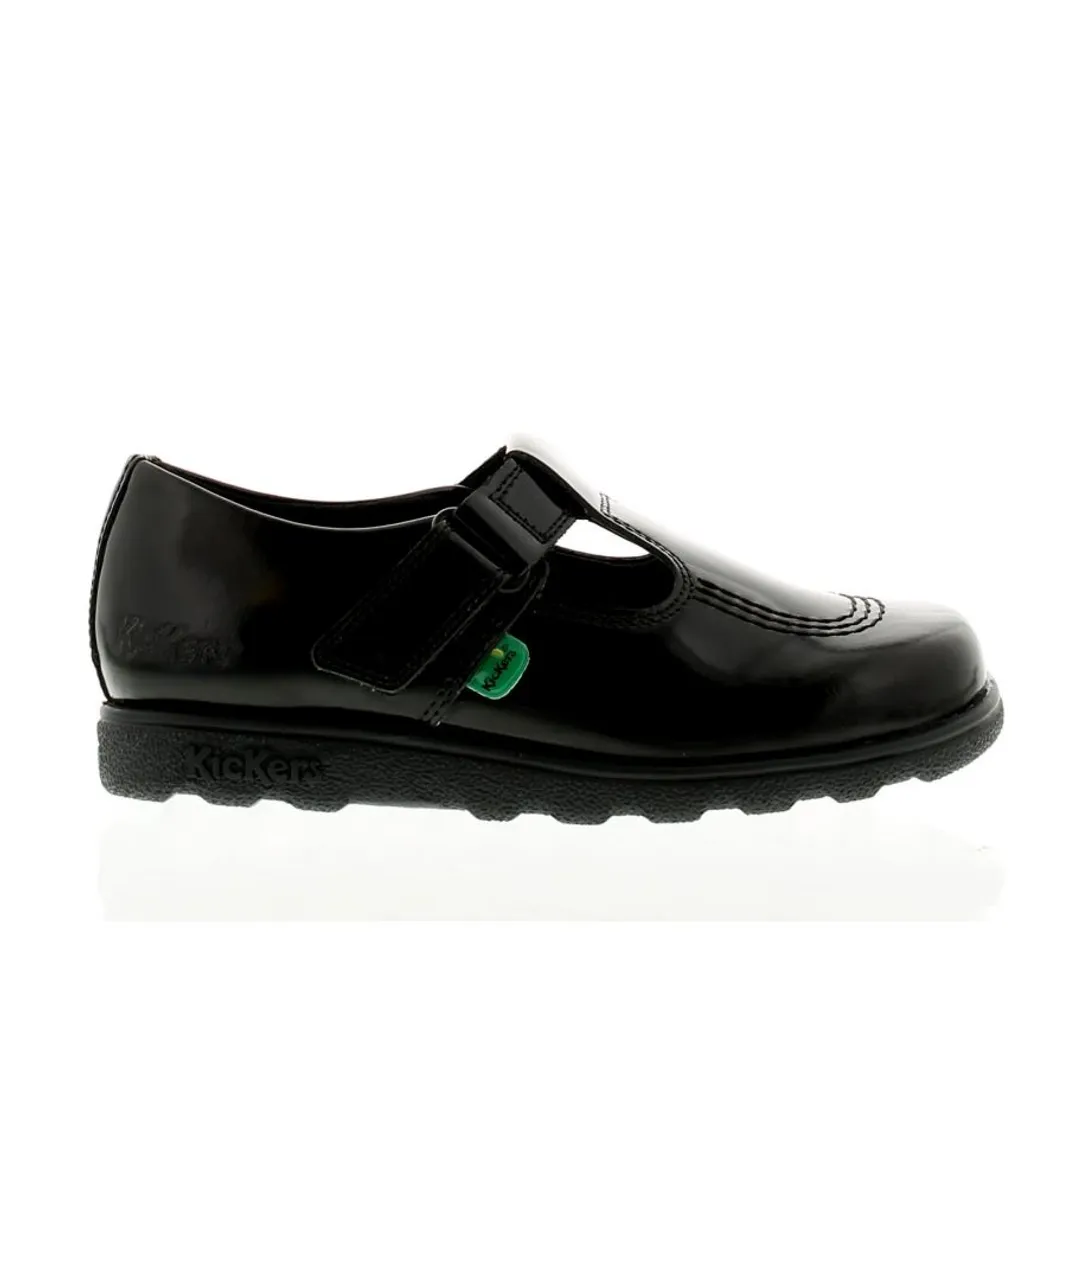 Kickers Childrens Unisex Kids T Bar Moc Toe Shoes - Black Leather